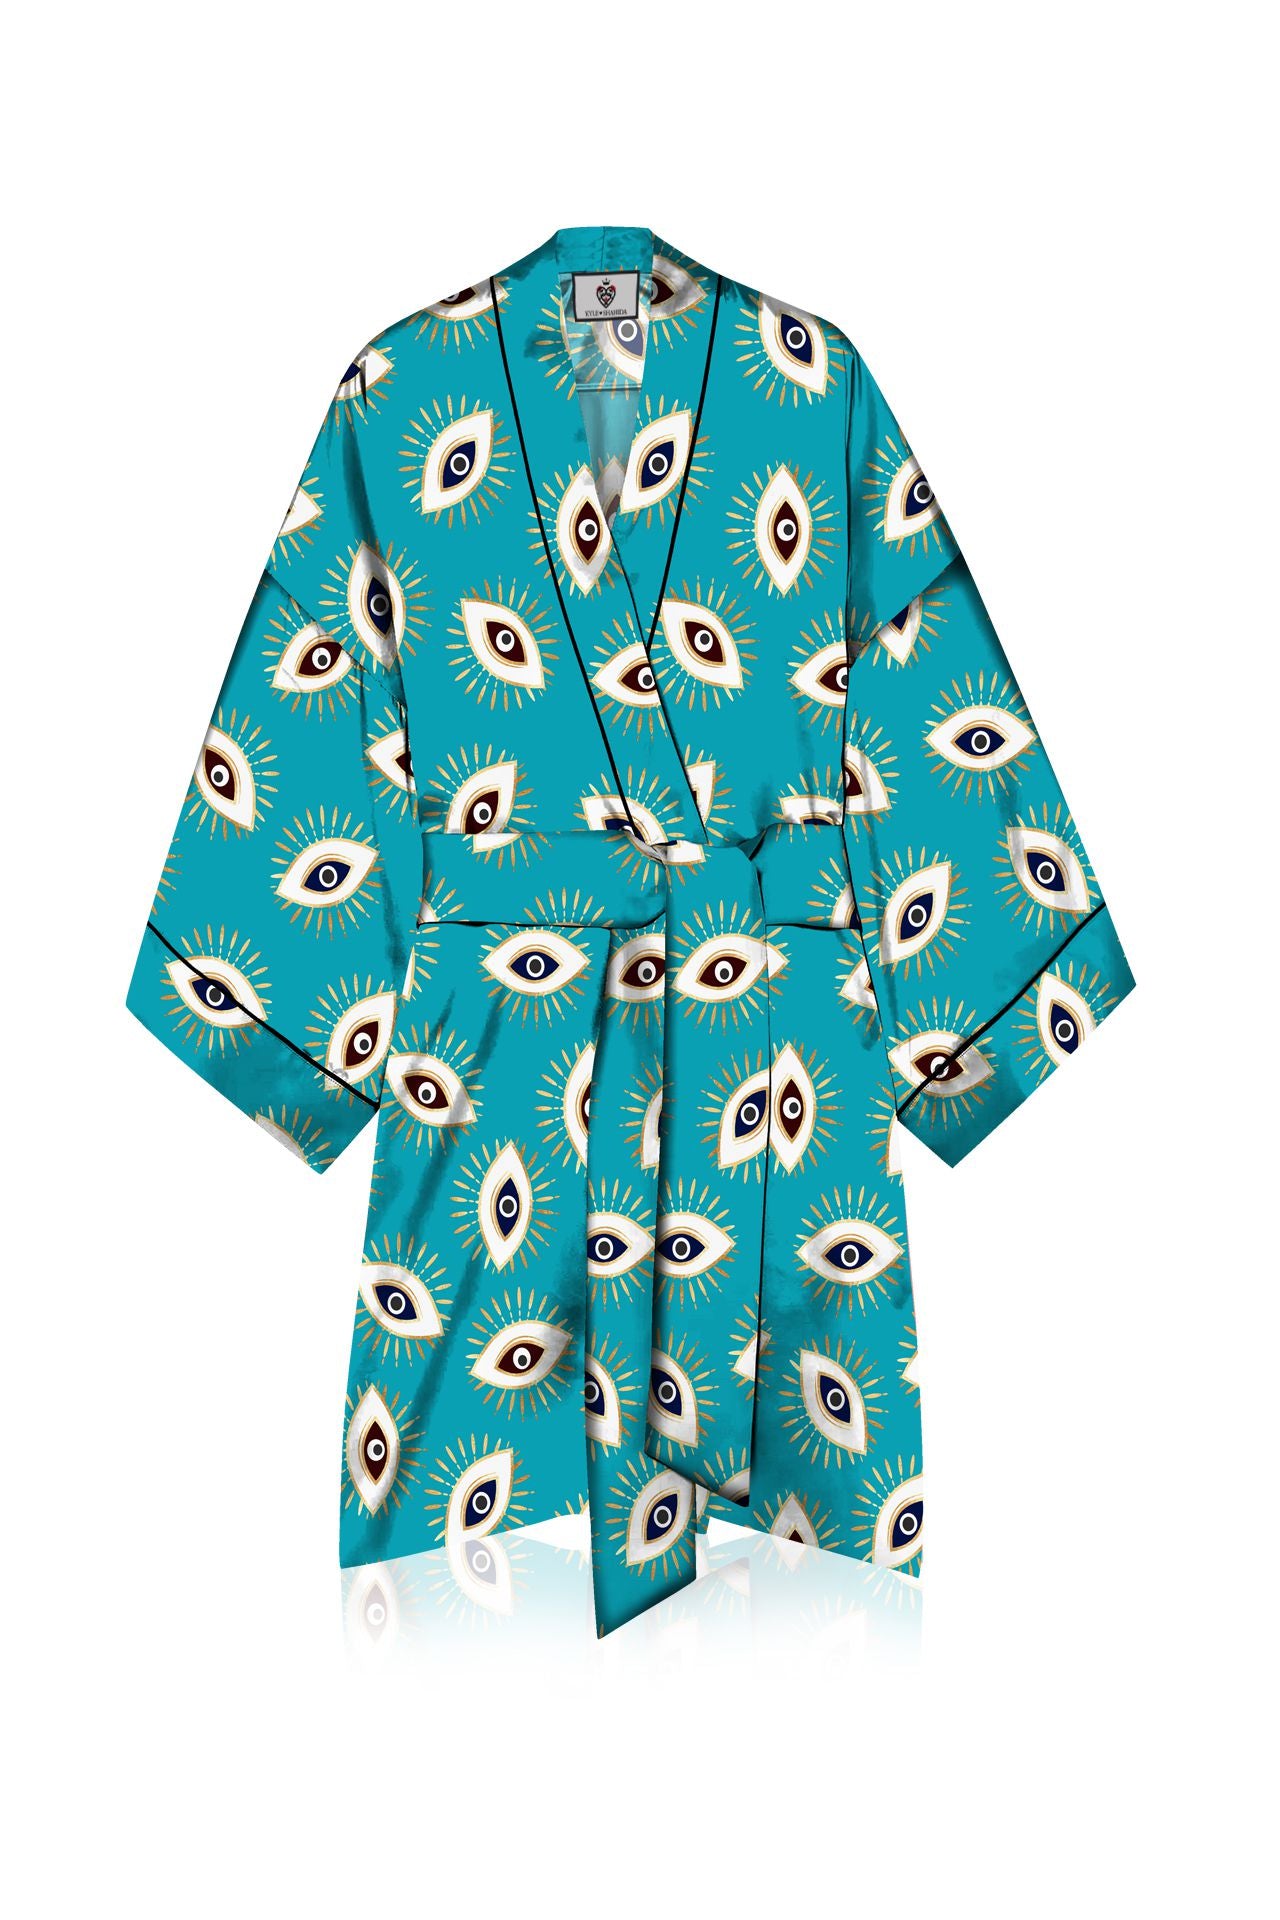 "short kimonos for women" "Kyle X Shahida" "silk robes for women short" "kimono short dresses"